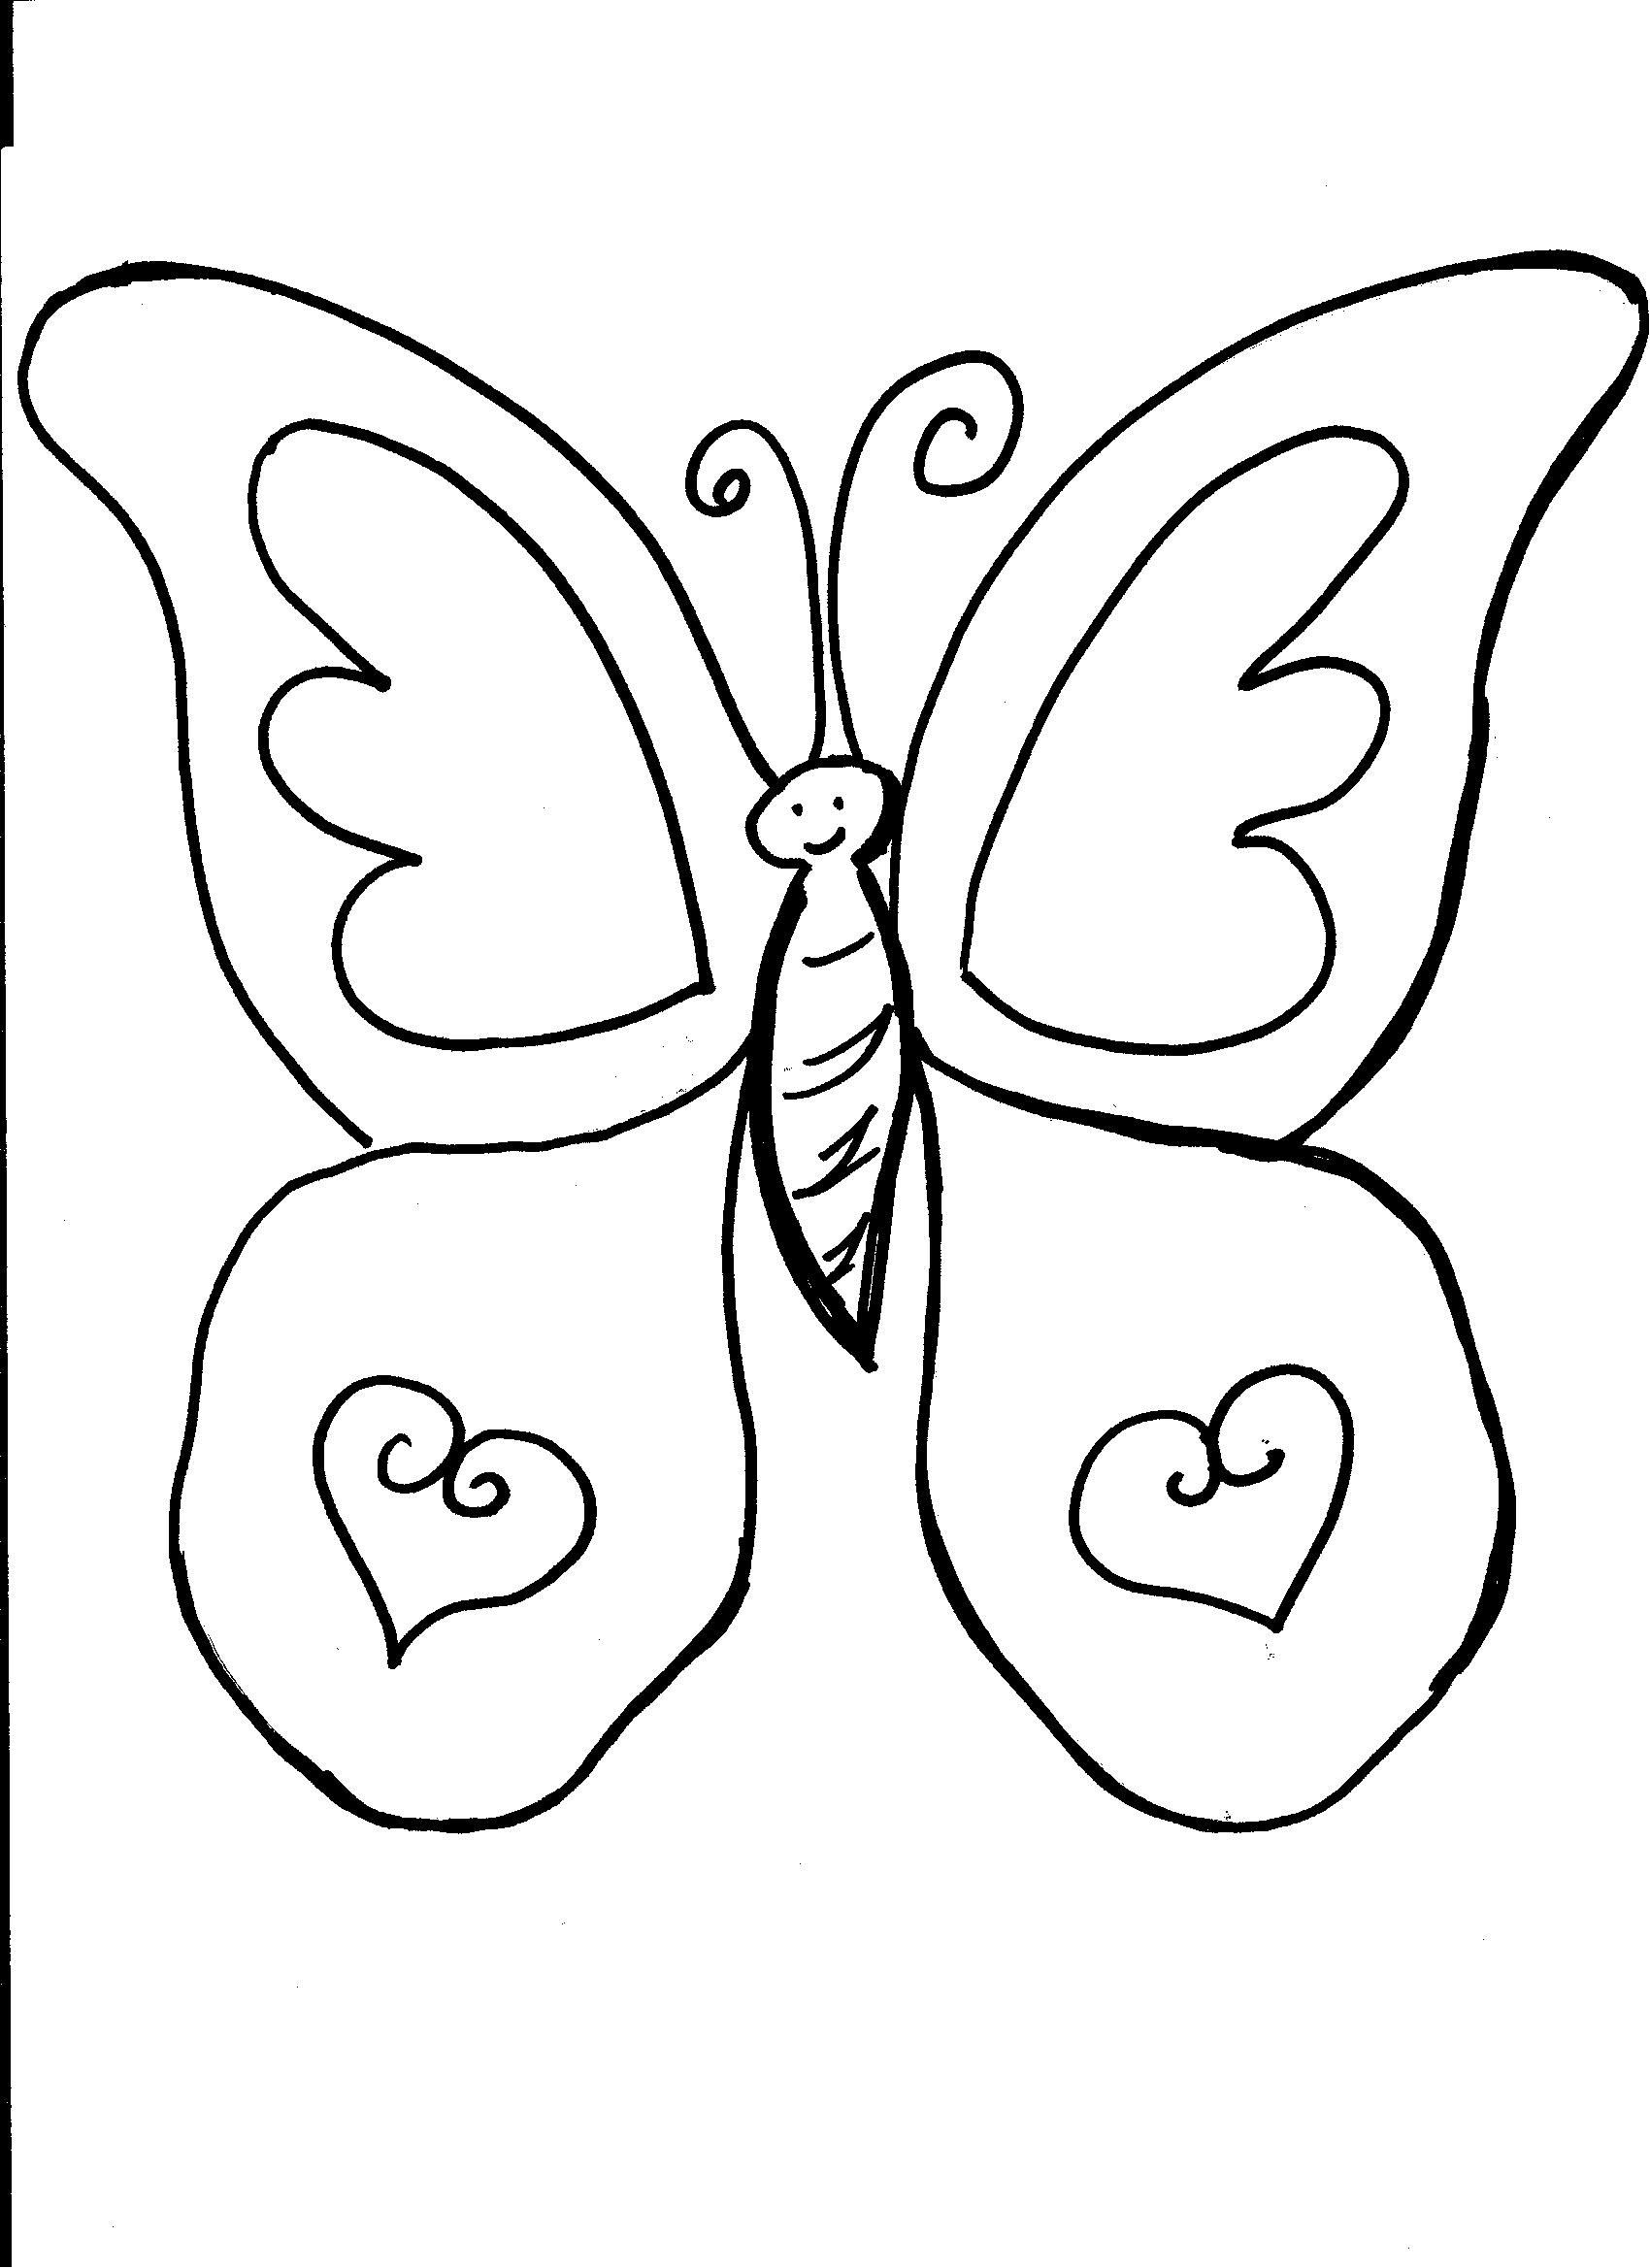 Раскраска 2 бабочки. Бабочка раскраска для детей. Бабочка раскраска для малышей. Раскраска для девочек бабочки. Раскраски бабочки красивые.